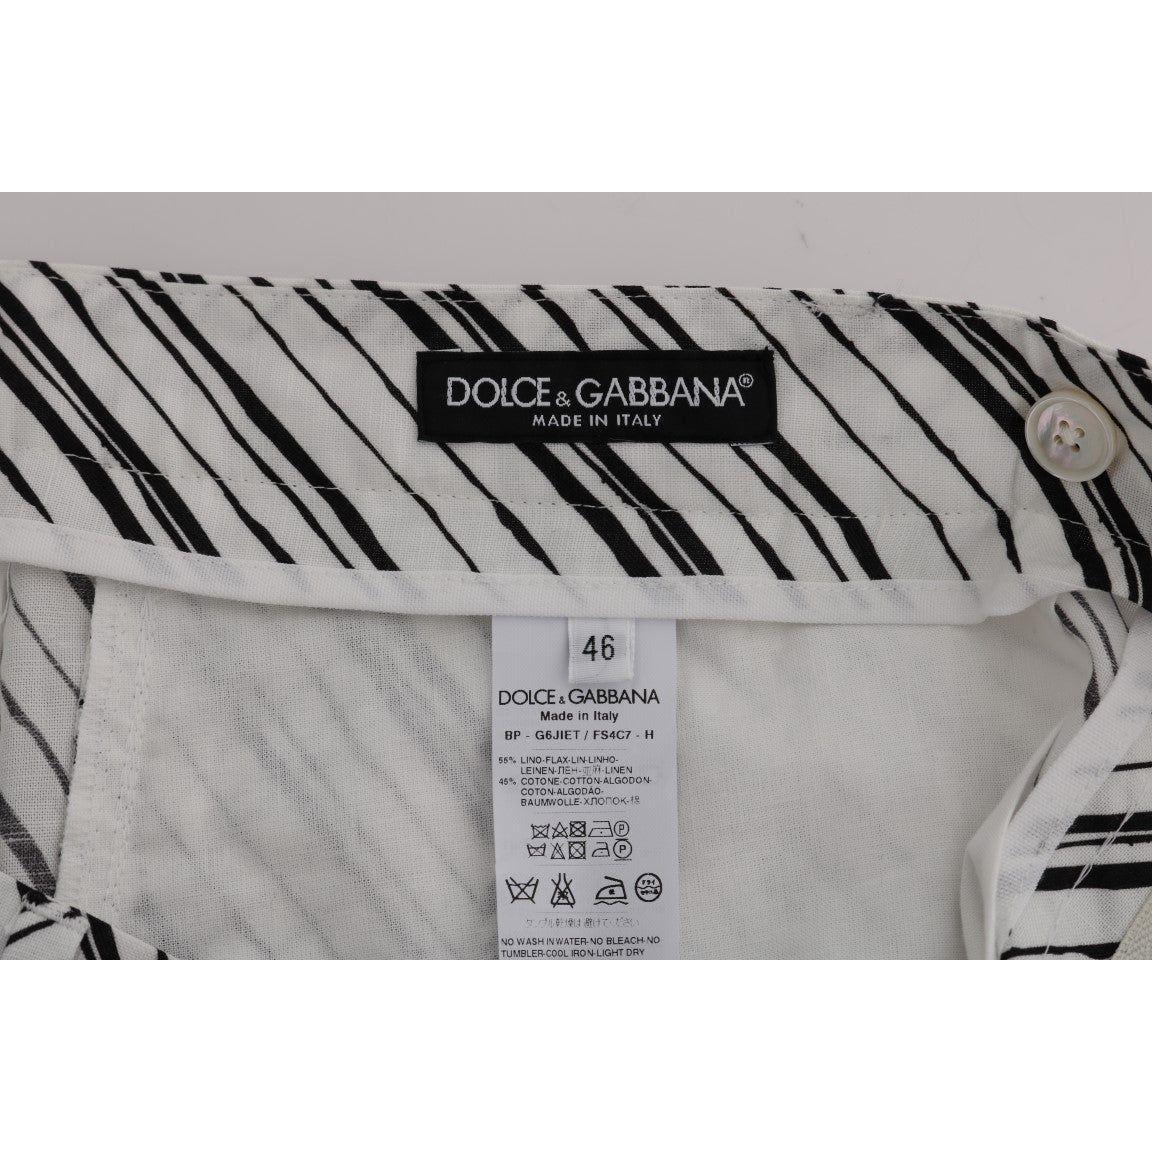 Dolce & Gabbana Elegant Striped Cotton-Linen Shorts white-black-striped-casual-shorts-1 443622-white-black-striped-casual-shorts-2-5.jpg